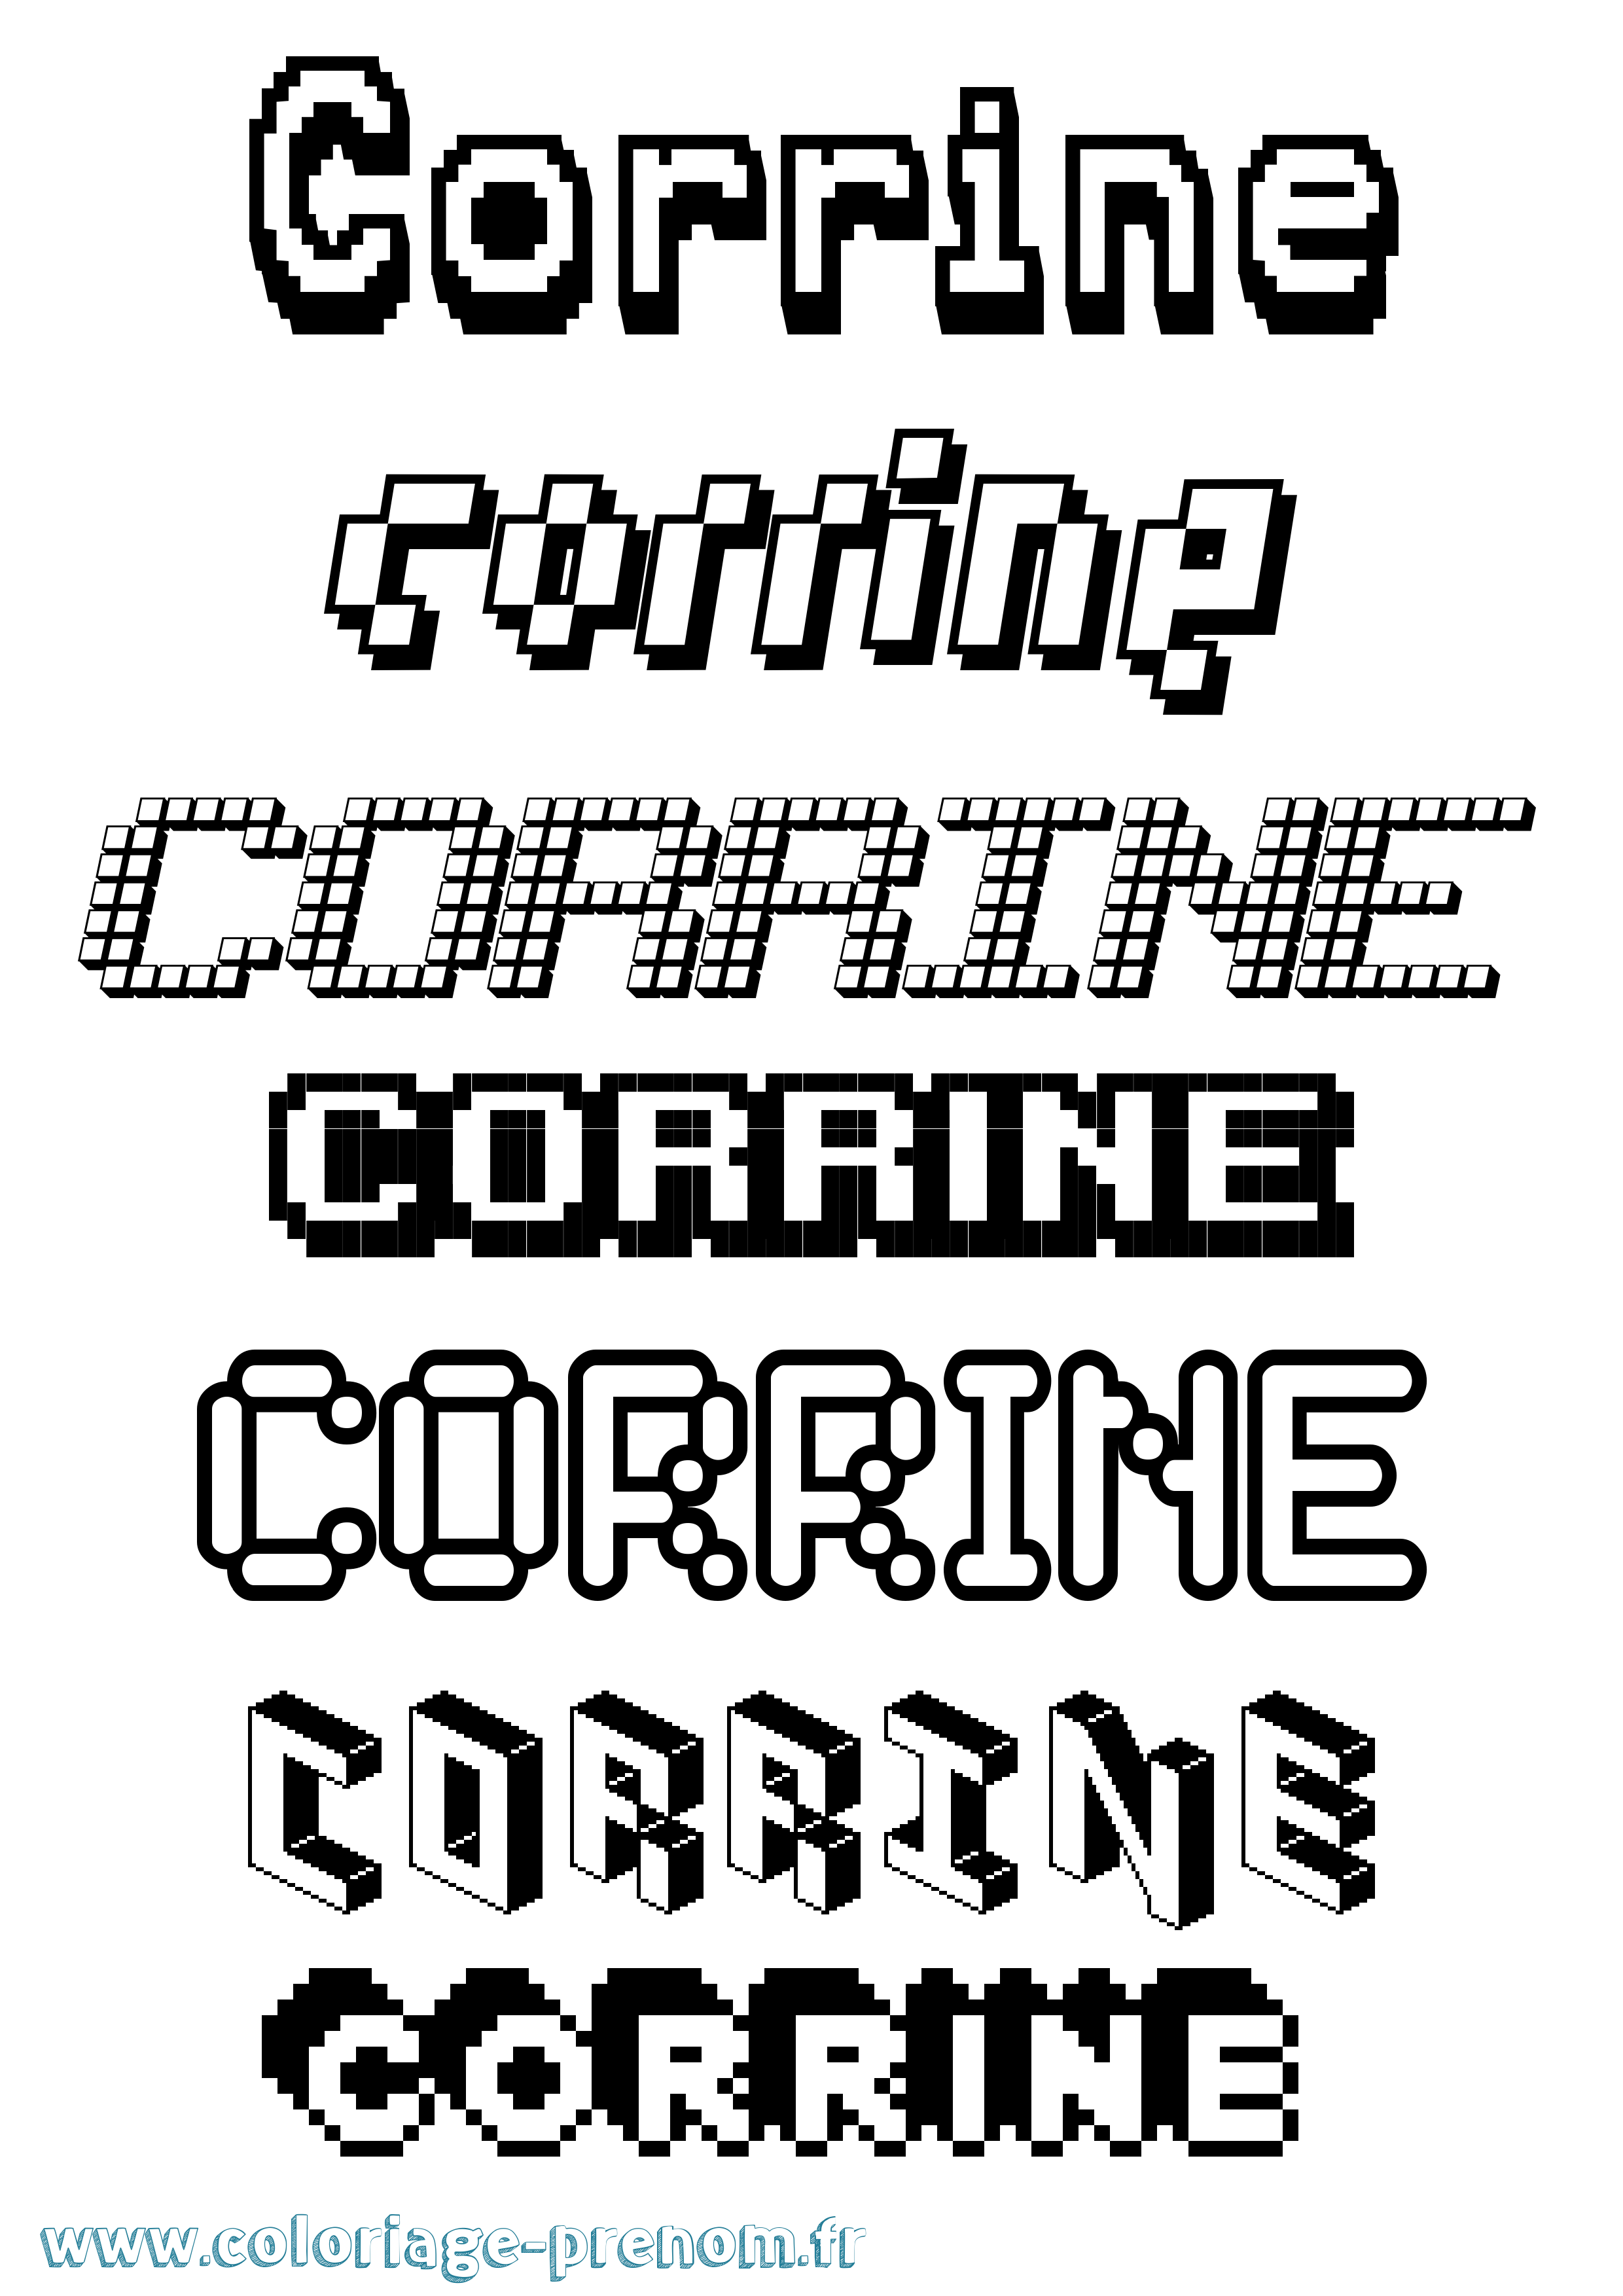 Coloriage prénom Corrine Pixel